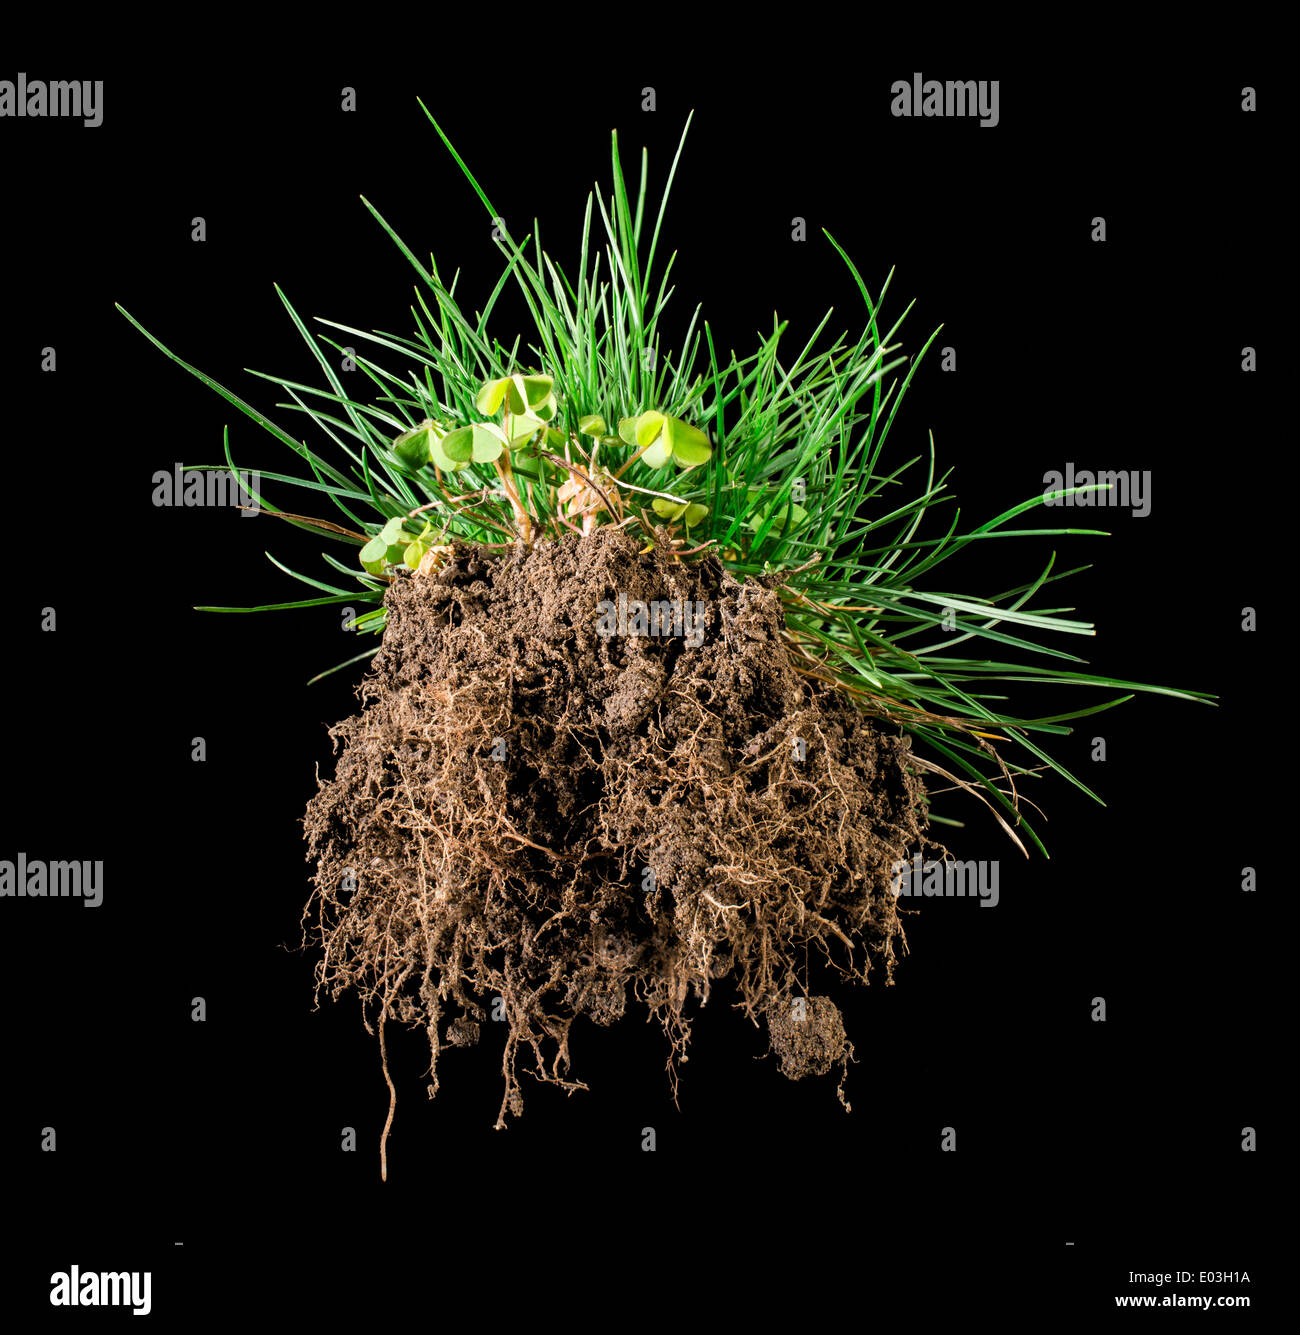 Black isolated turf grass and earth. Rhizome Stock Photo